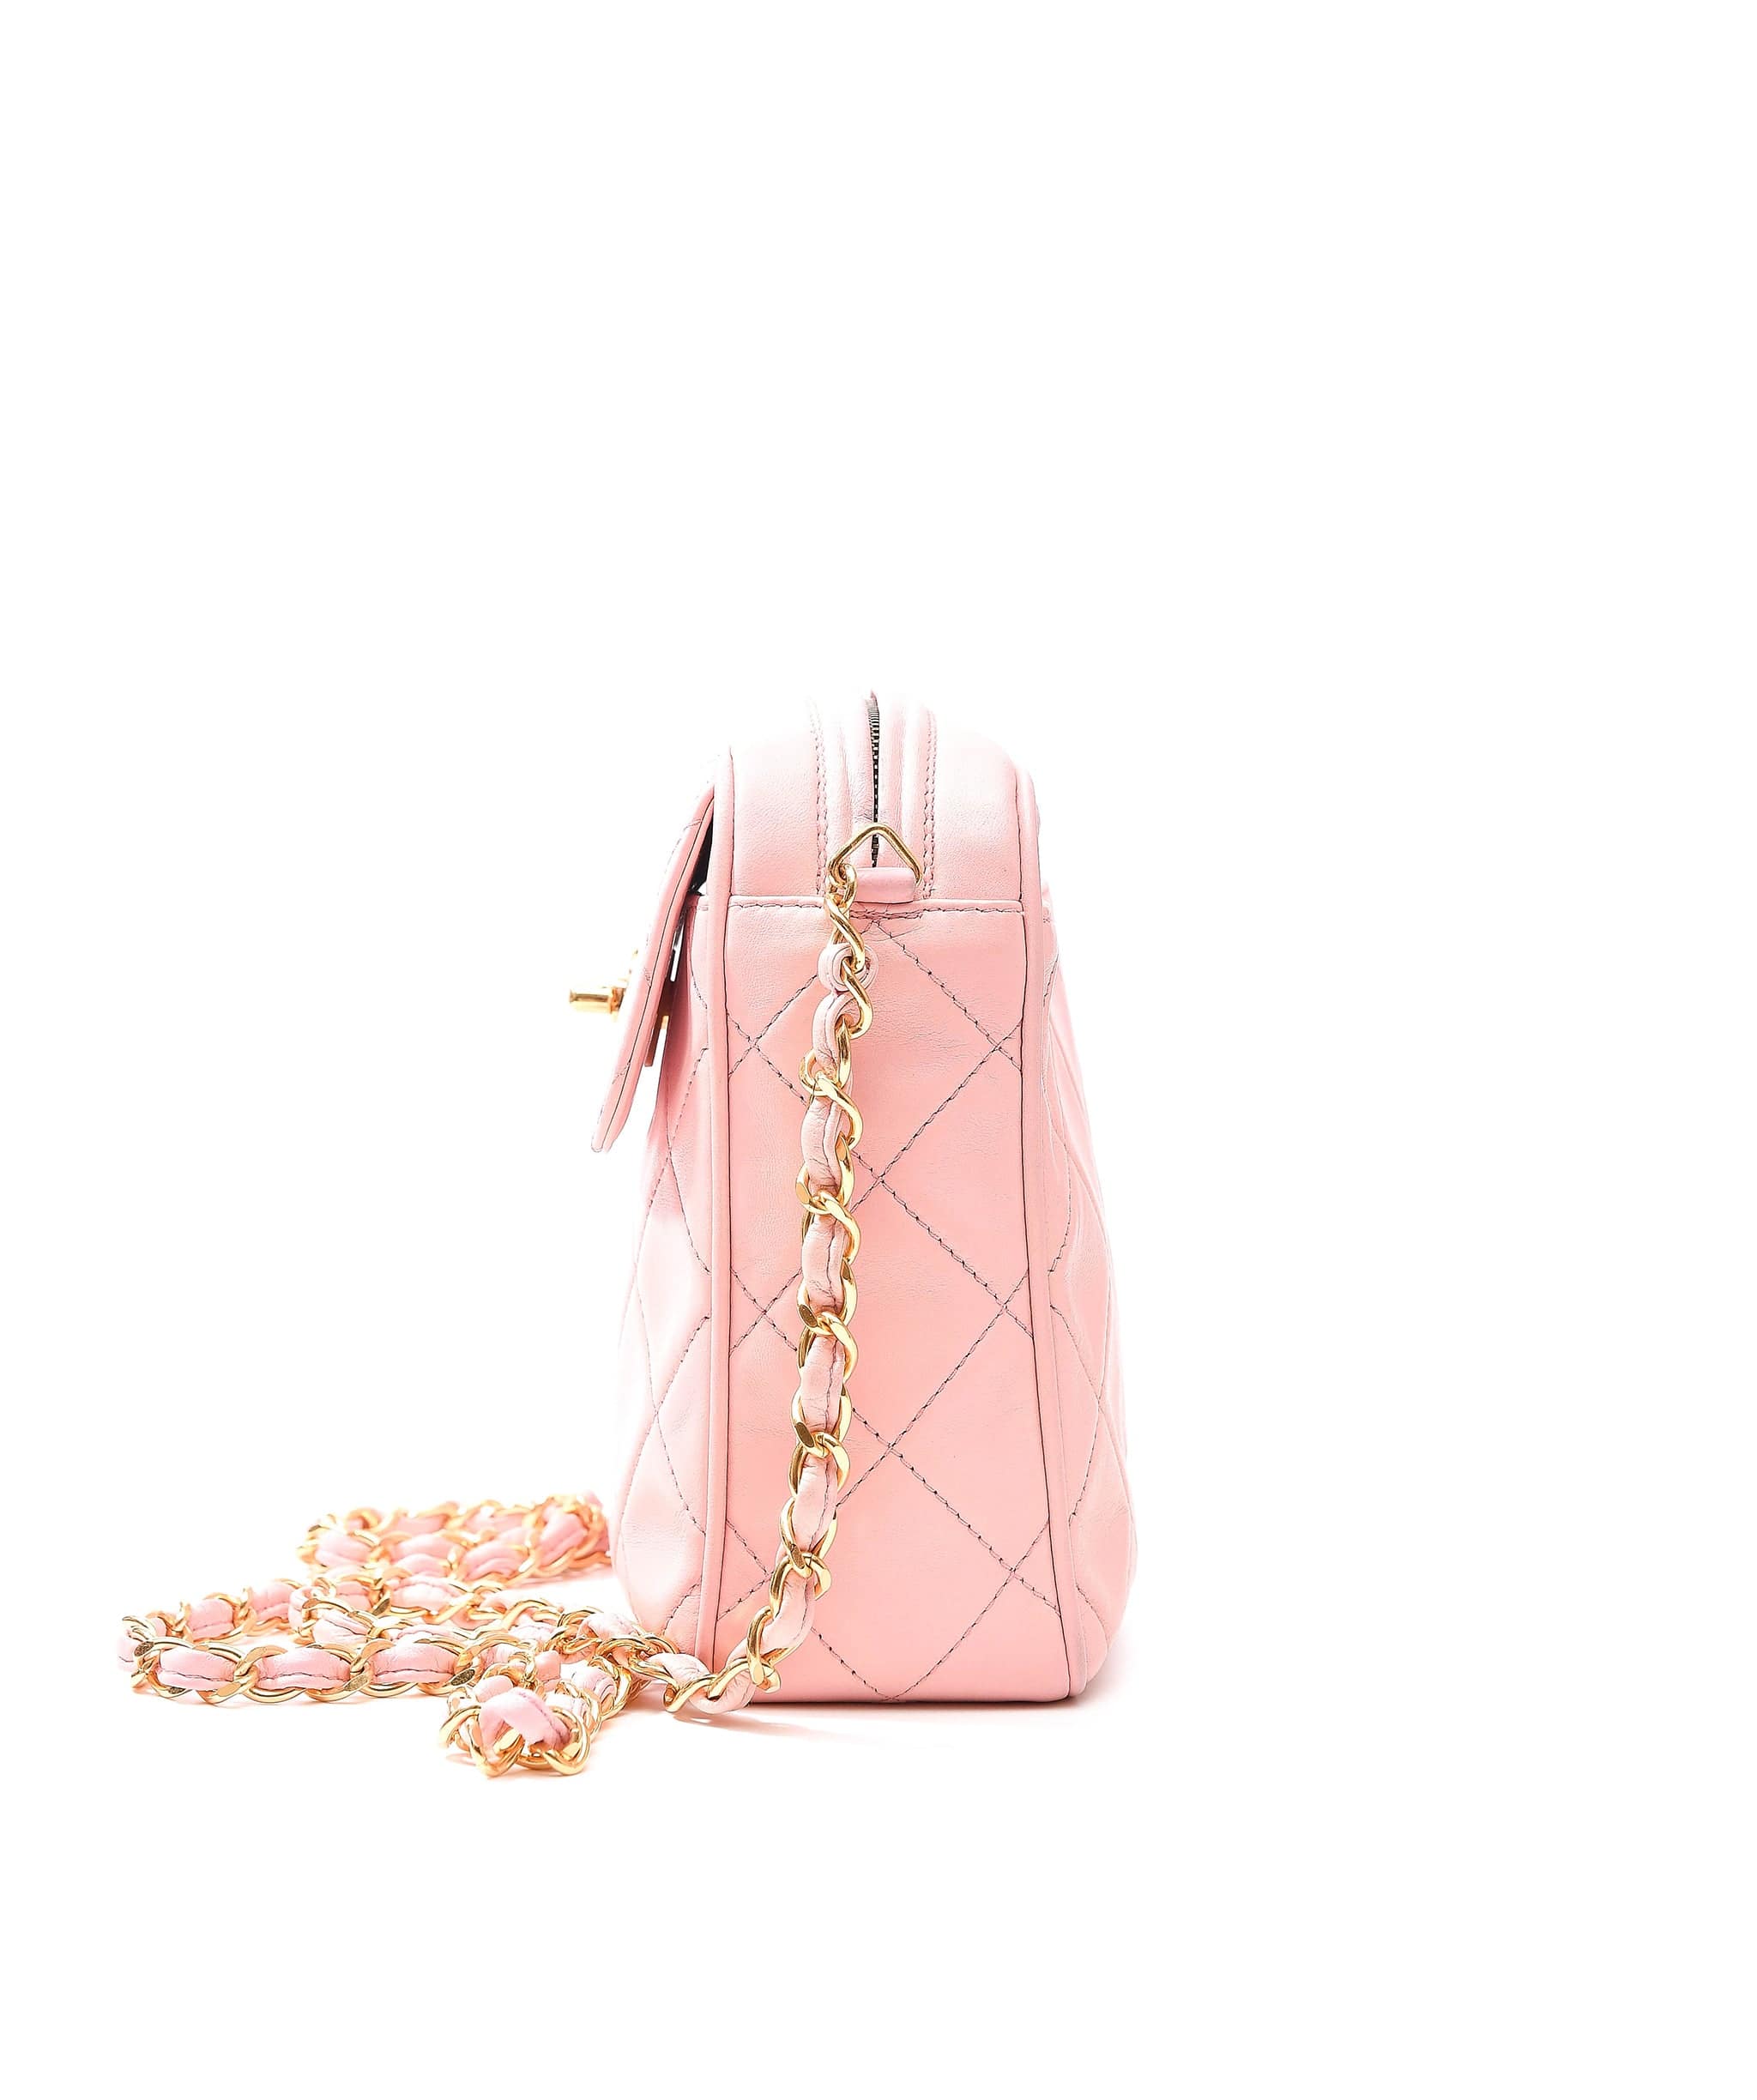 Chanel Chanel Small Pink Lambskin Camera bag - AWL2773